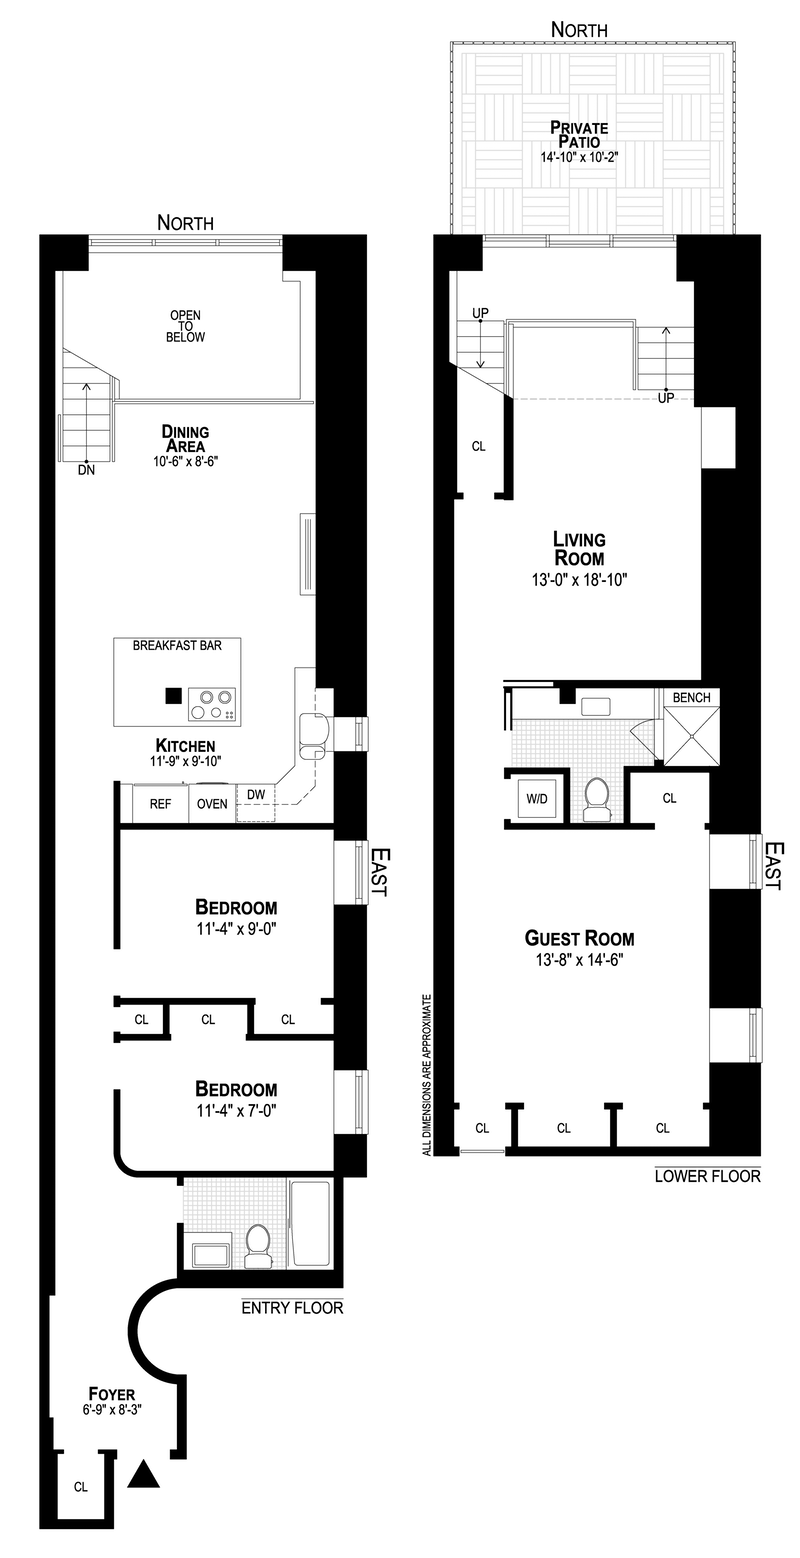 Floorplan for 155 West 80th Street